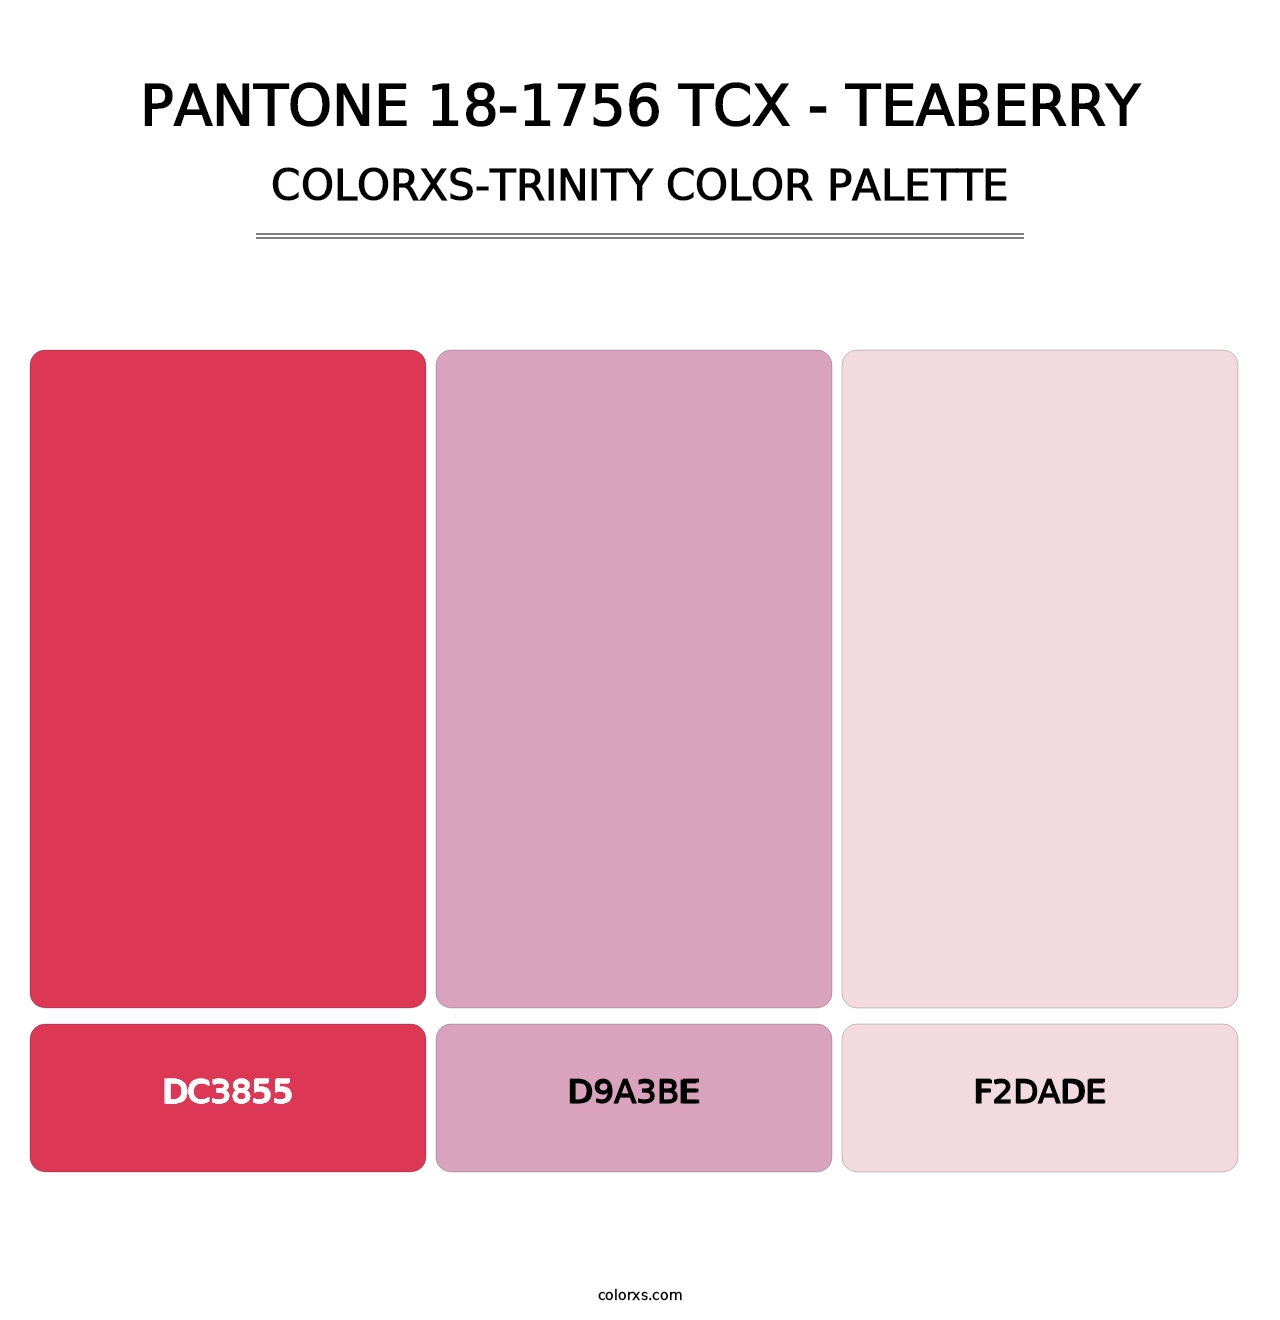 PANTONE 18-1756 TCX - Teaberry - Colorxs Trinity Palette